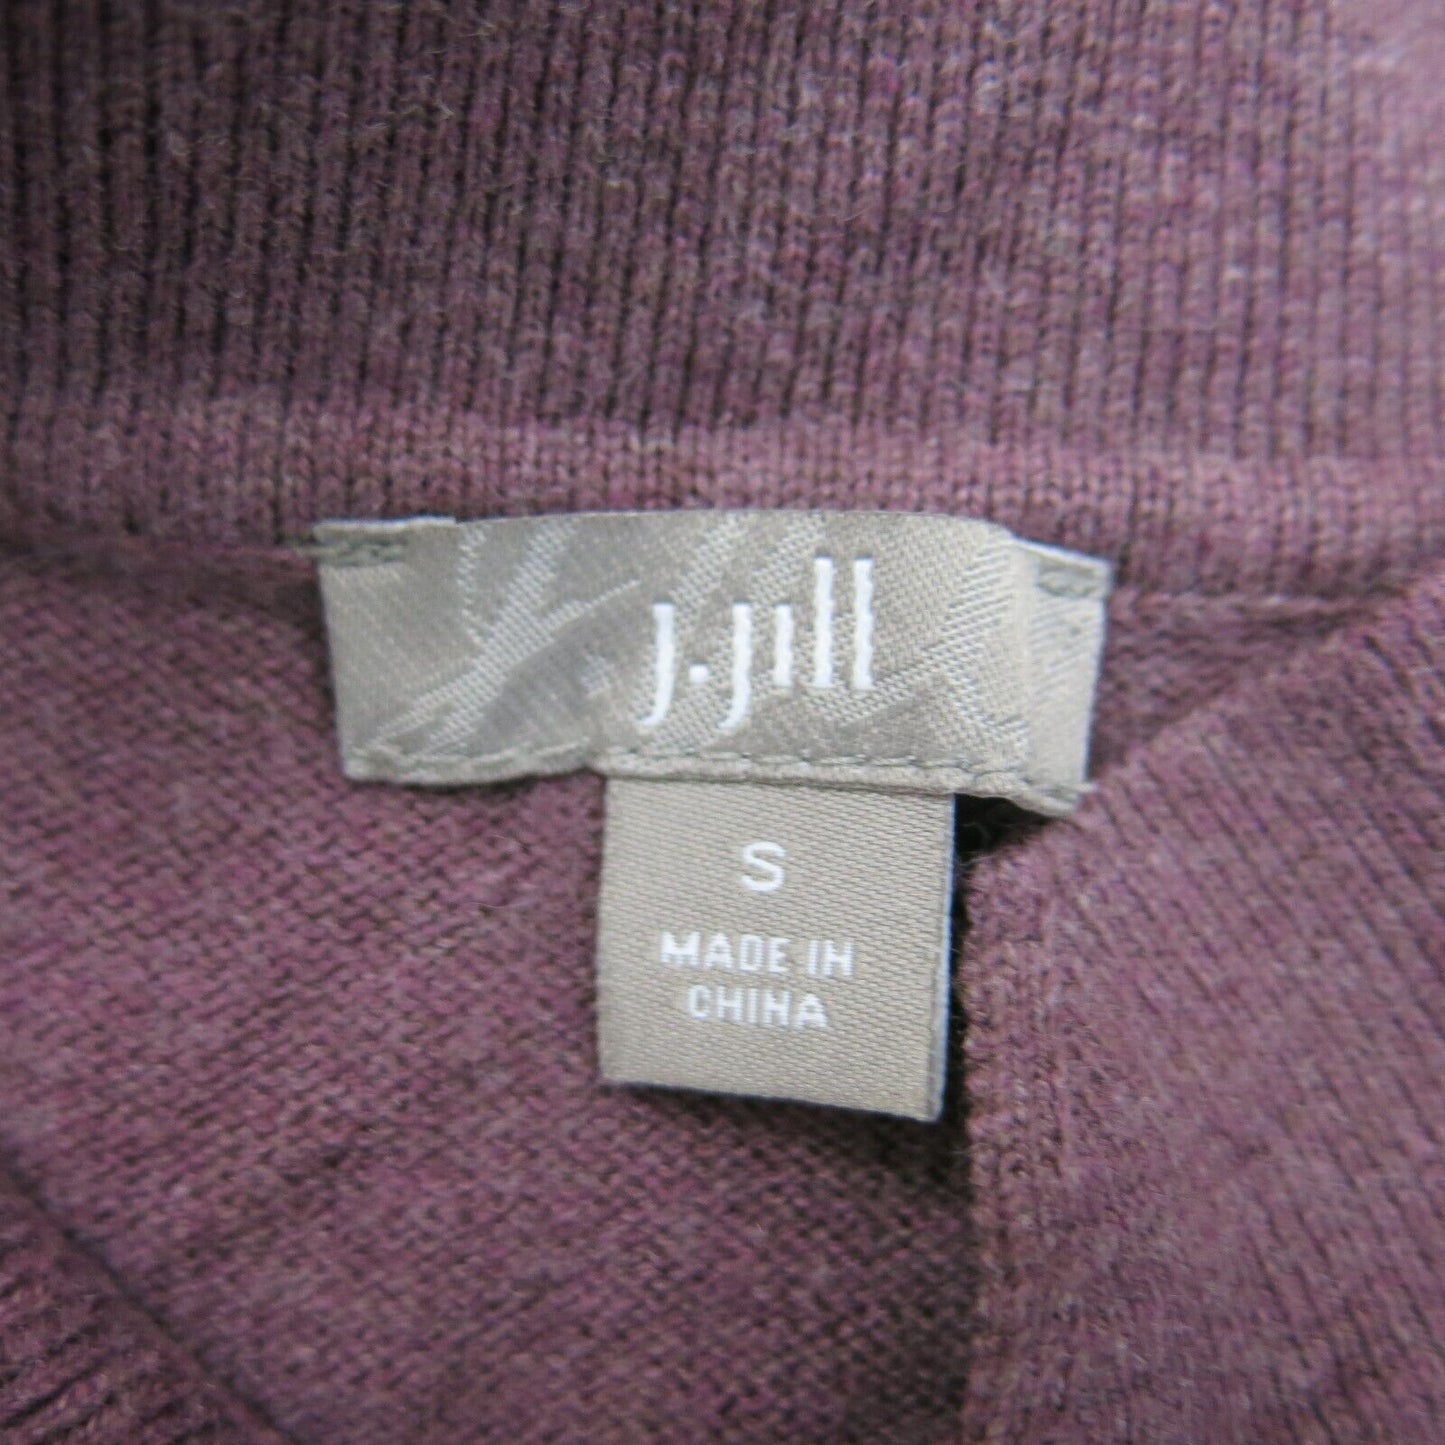 J. Jill Women Pullover Sweatshirt Henley Neck Long Sleeves Red/Brown Size S